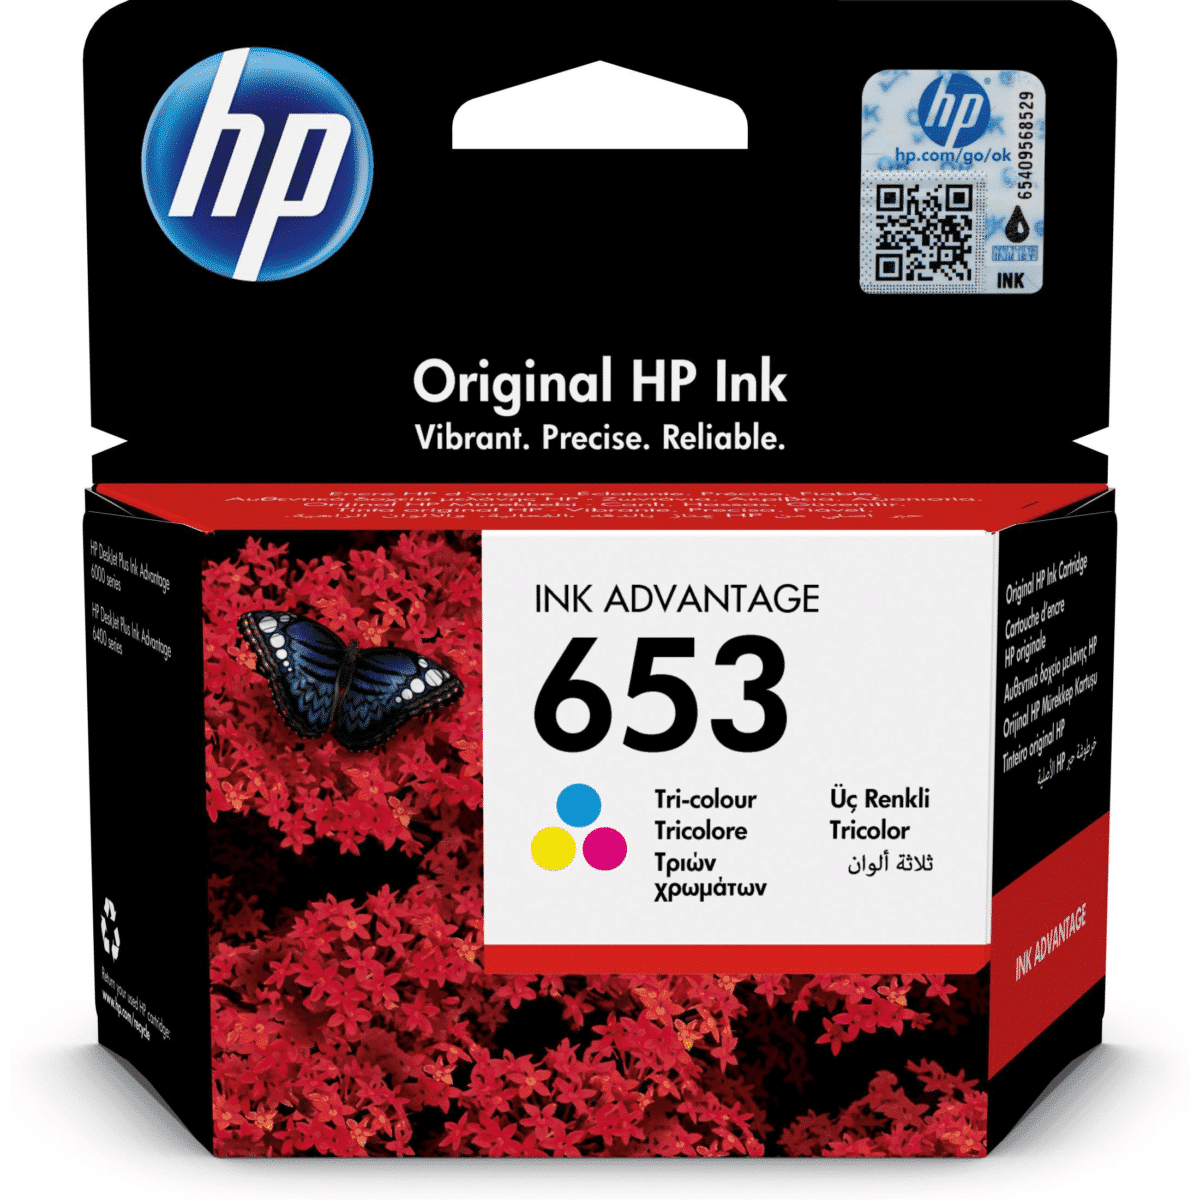 HP 653 Ink Advantage Cyan